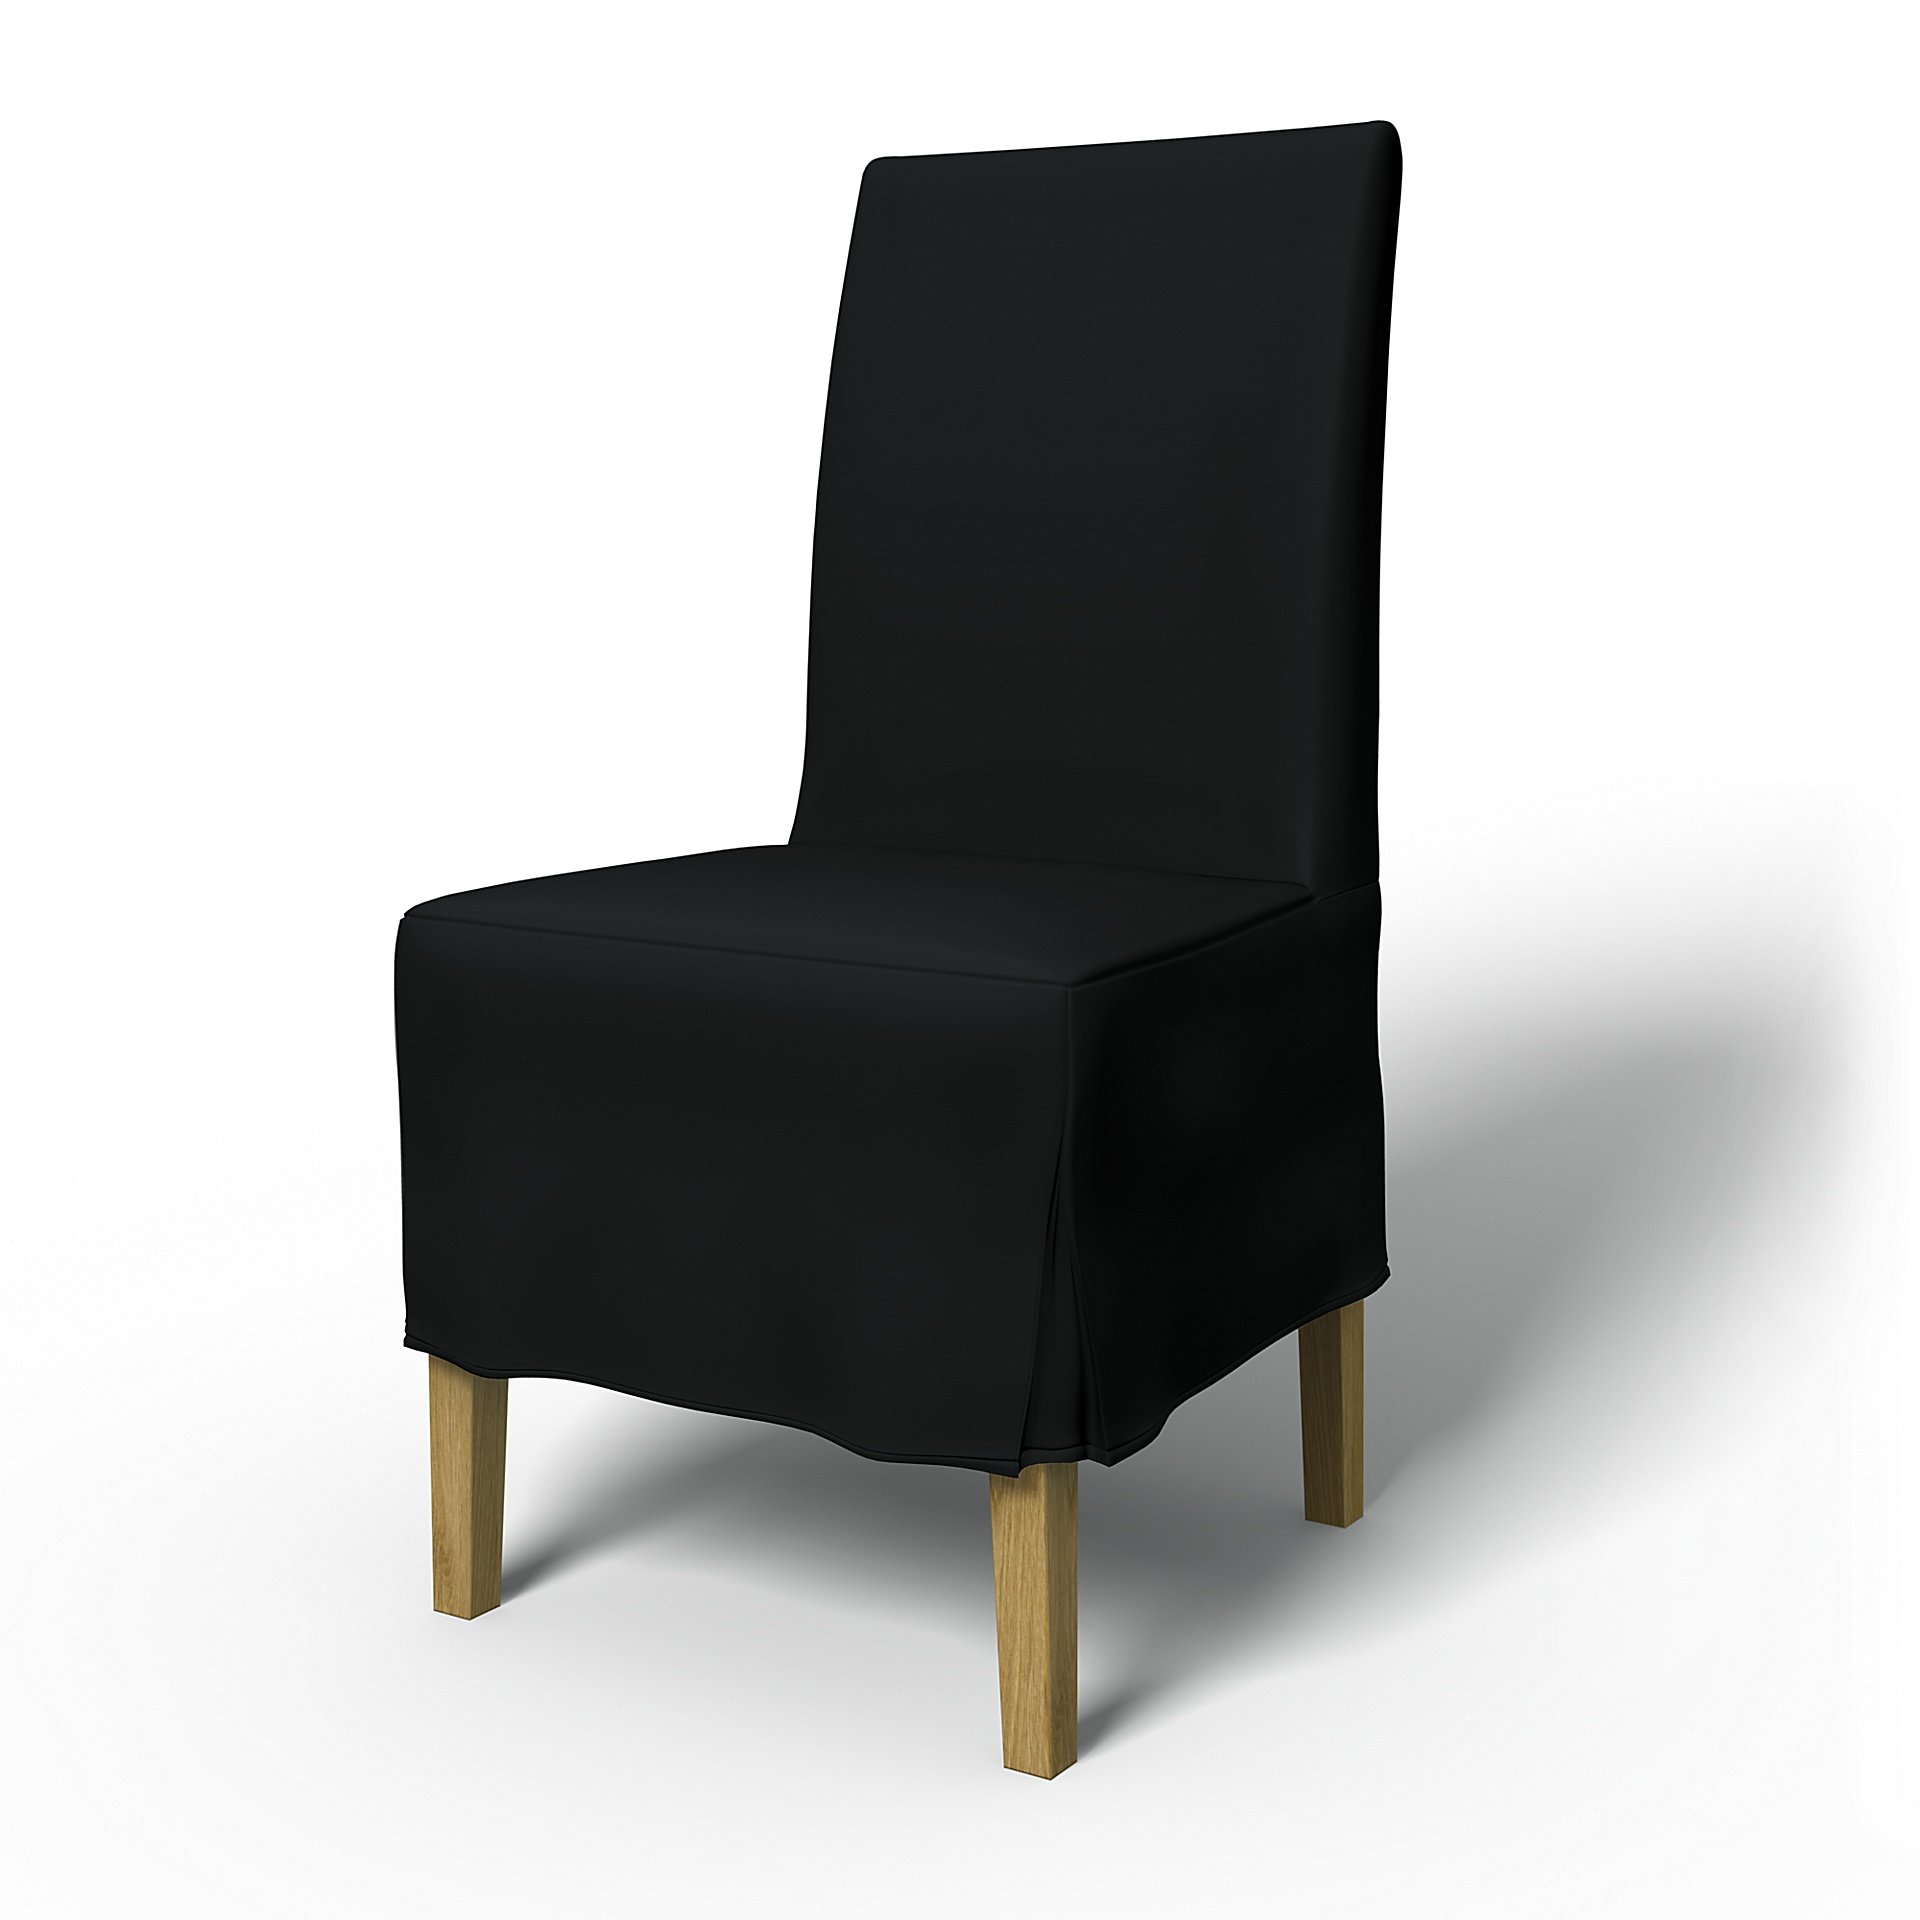 IKEA - Henriksdal Dining Chair Cover Medium skirt with Box Pleat (Standard model), Jet Black, Cotton